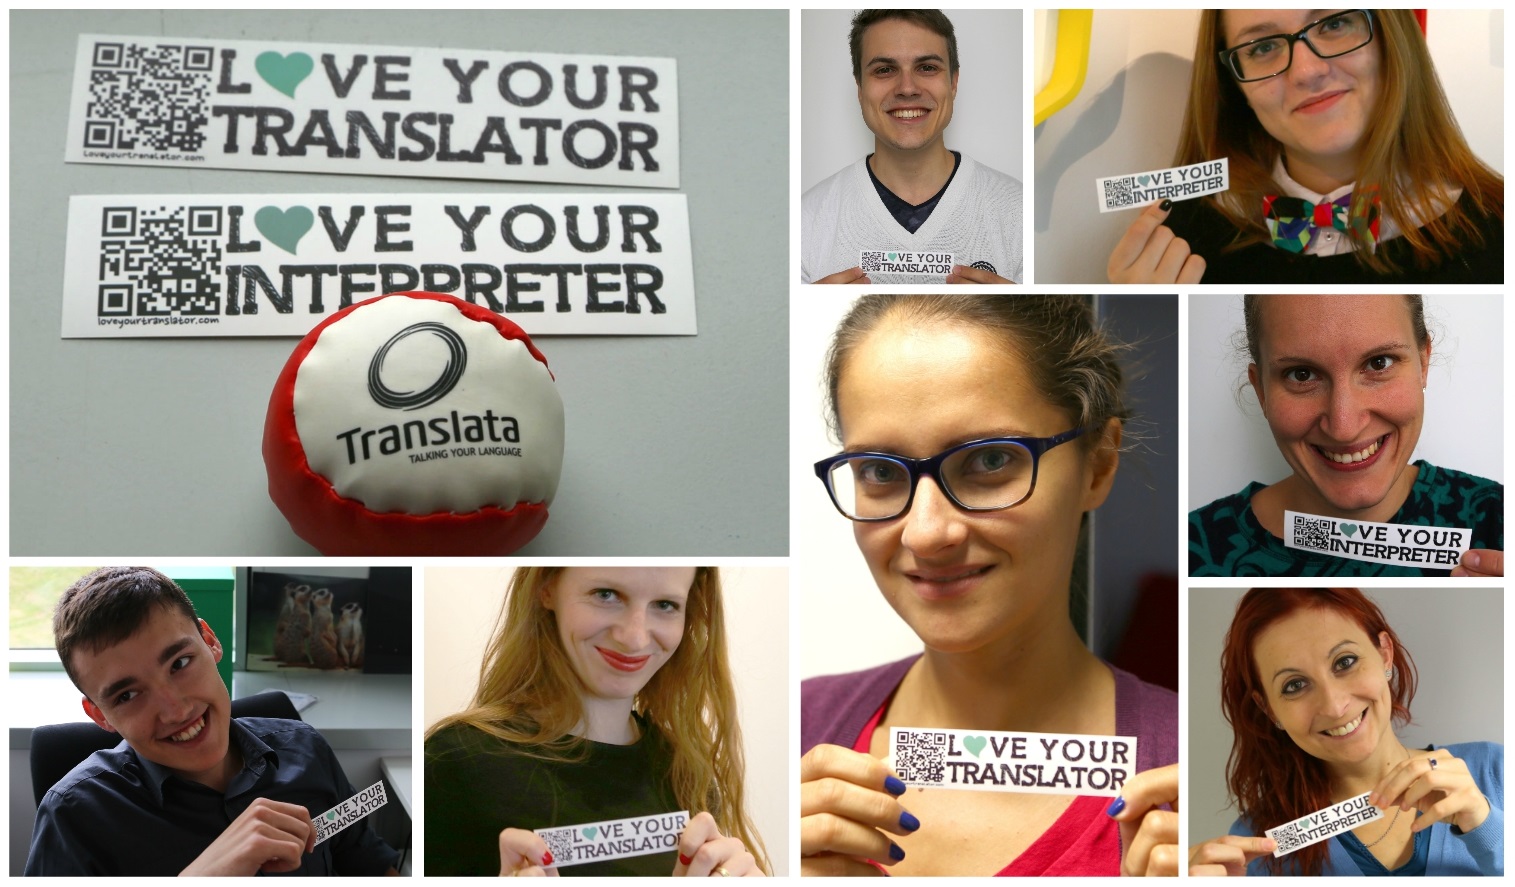 Love your translator by Translata